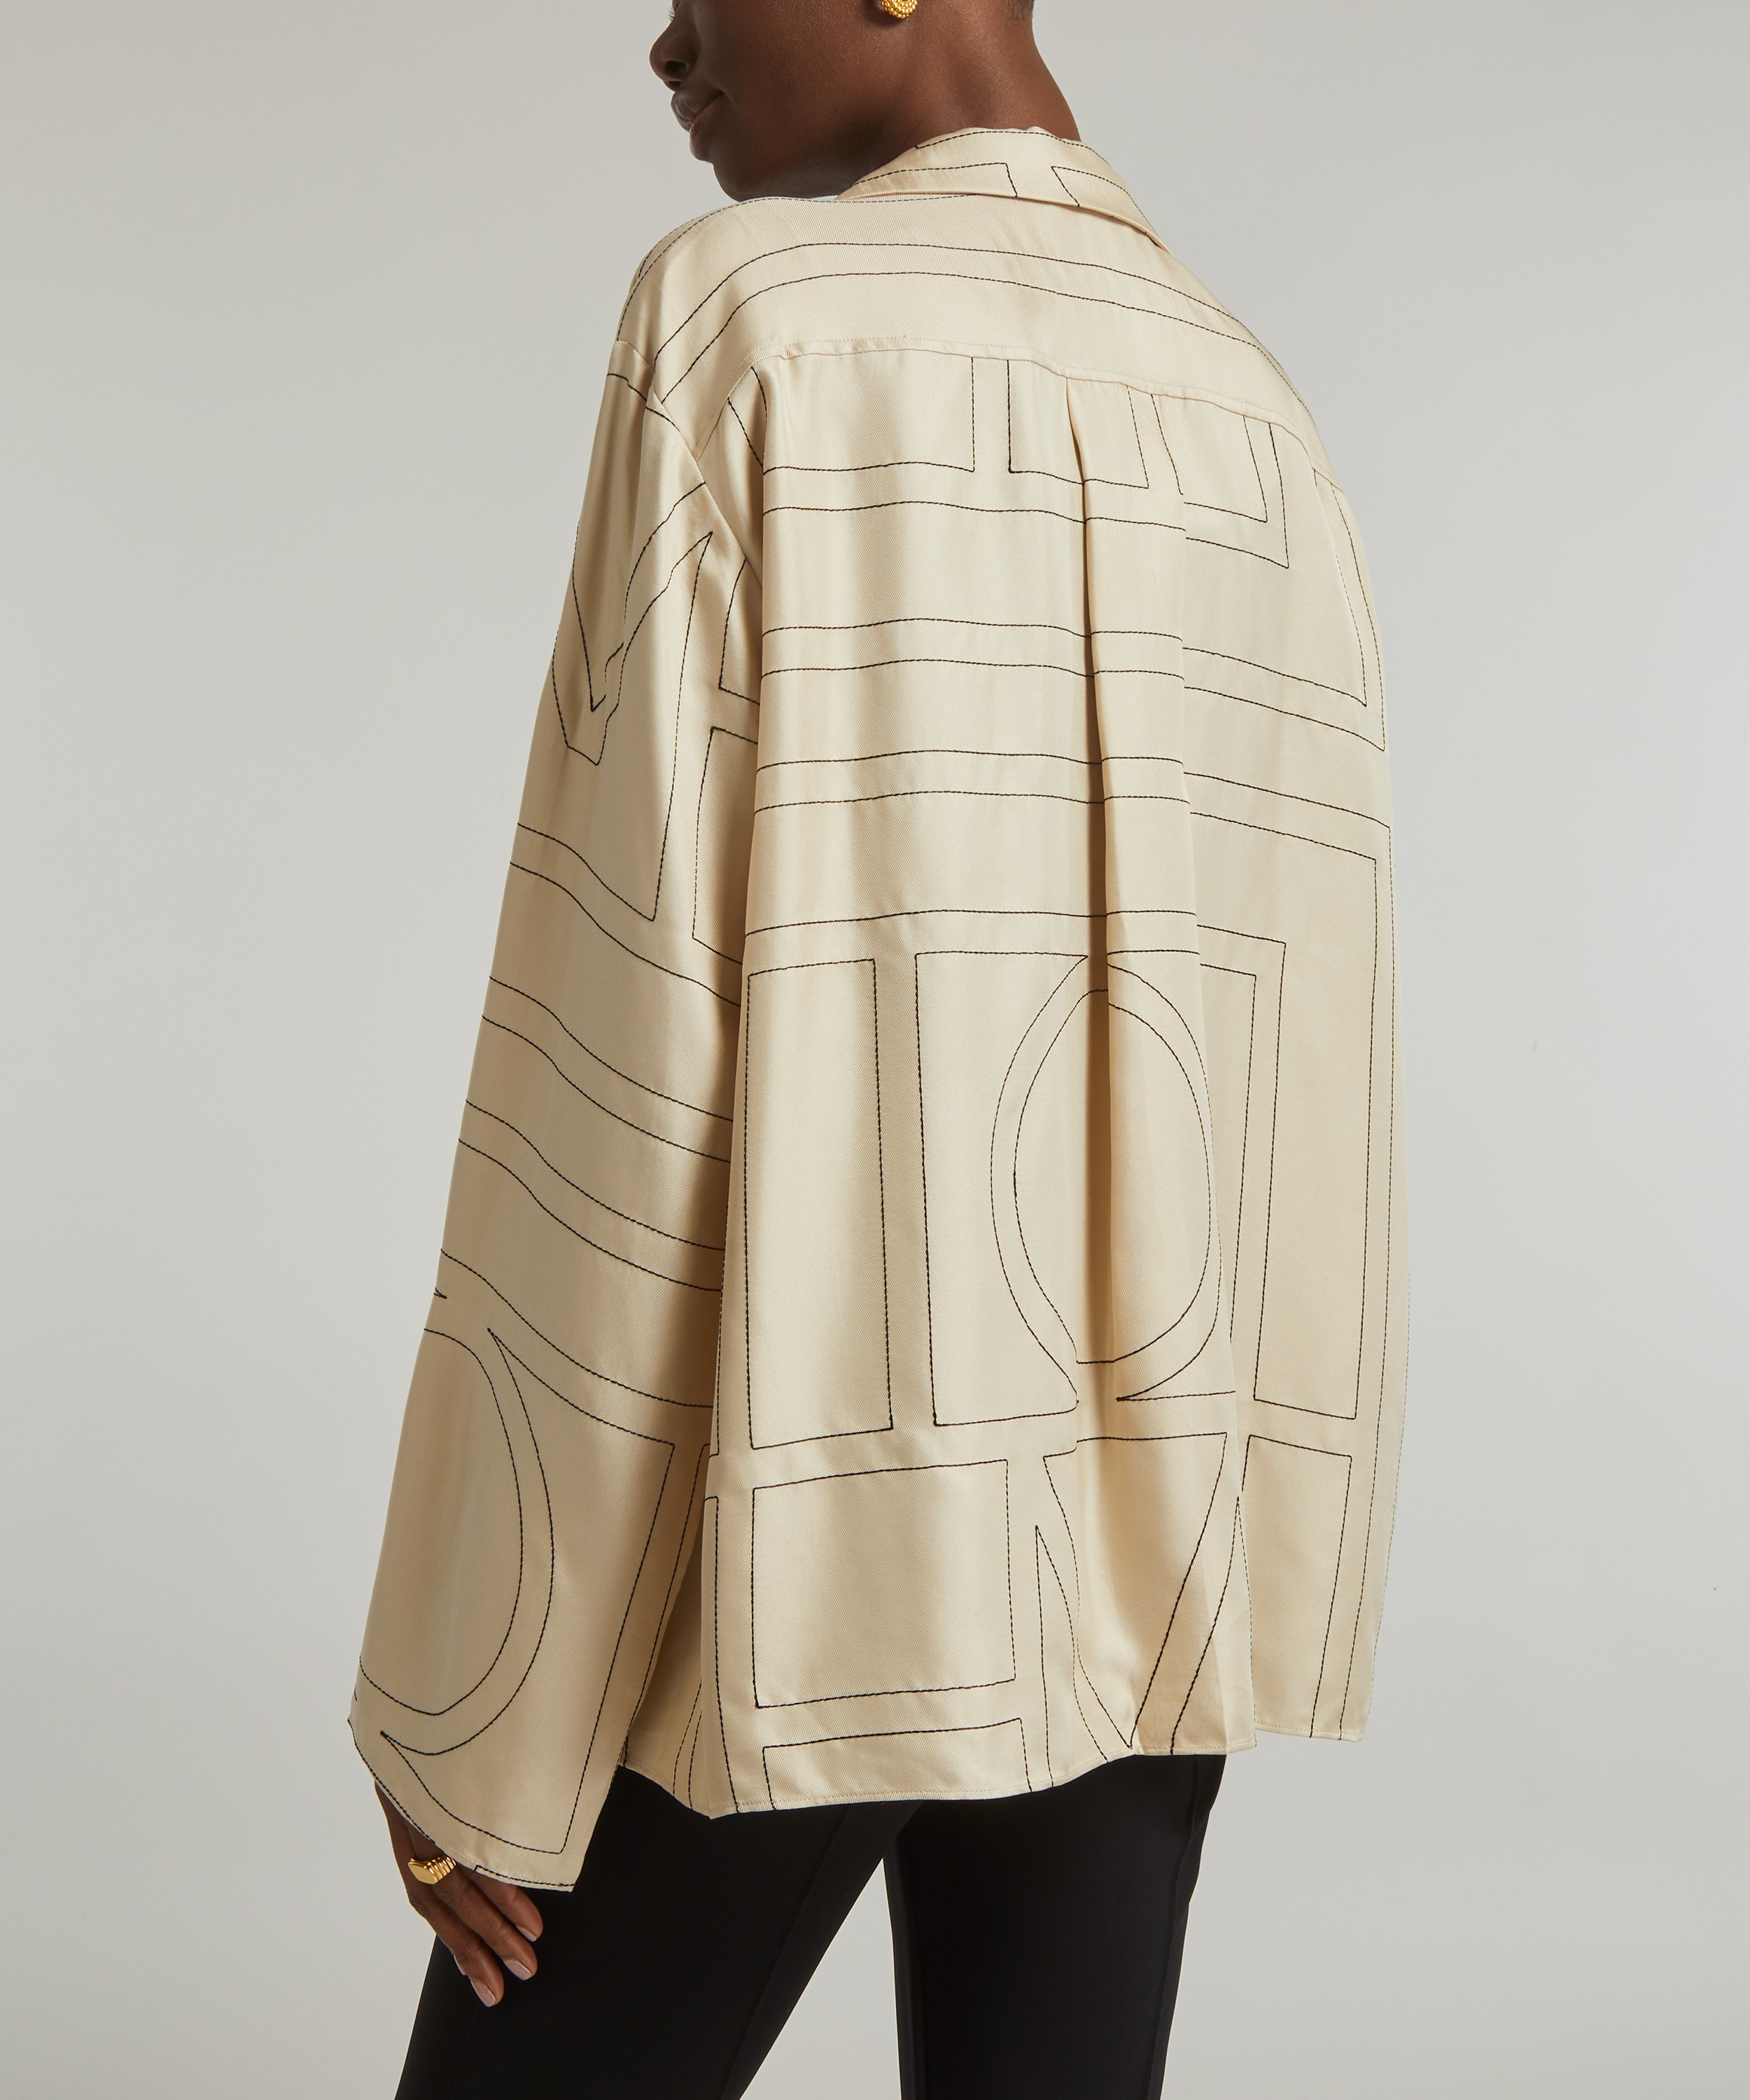 Totême Beige Silk Monogram PJ Shirt - ShopStyle Sleepwear Tops